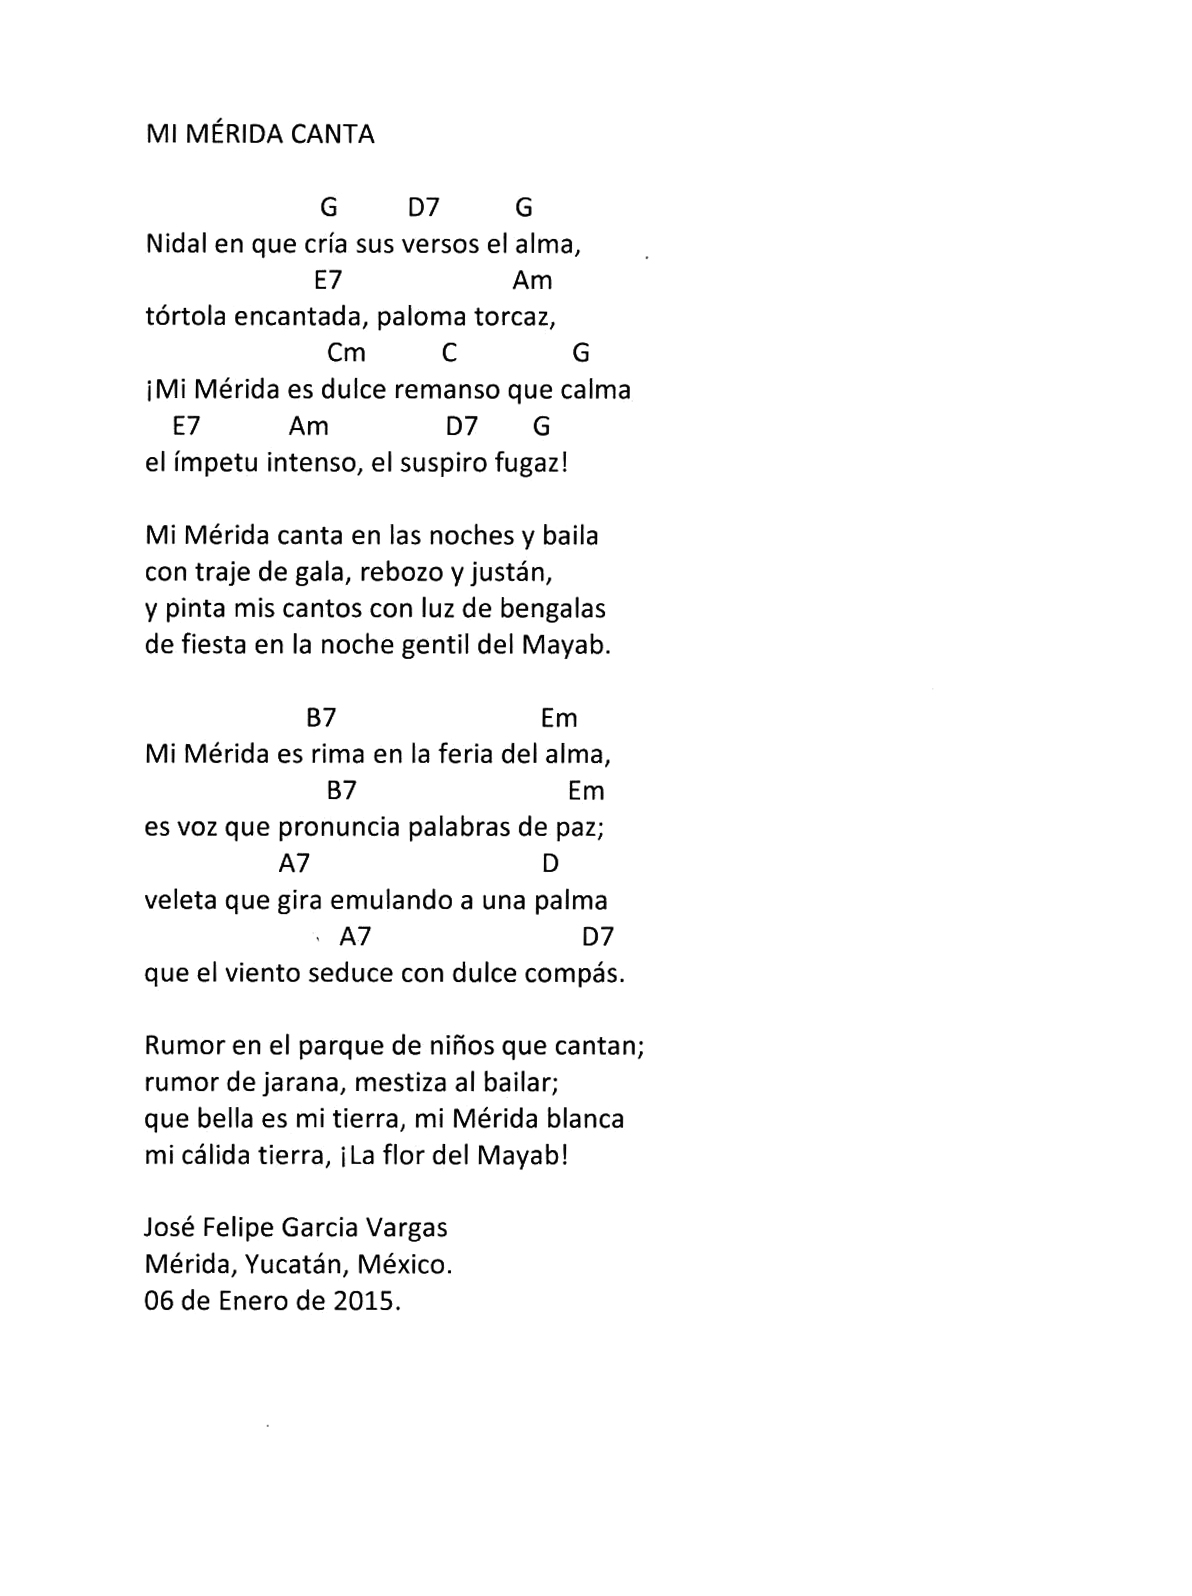 Mi Mérida canta - Jarana de Felipe García - Pág 2.